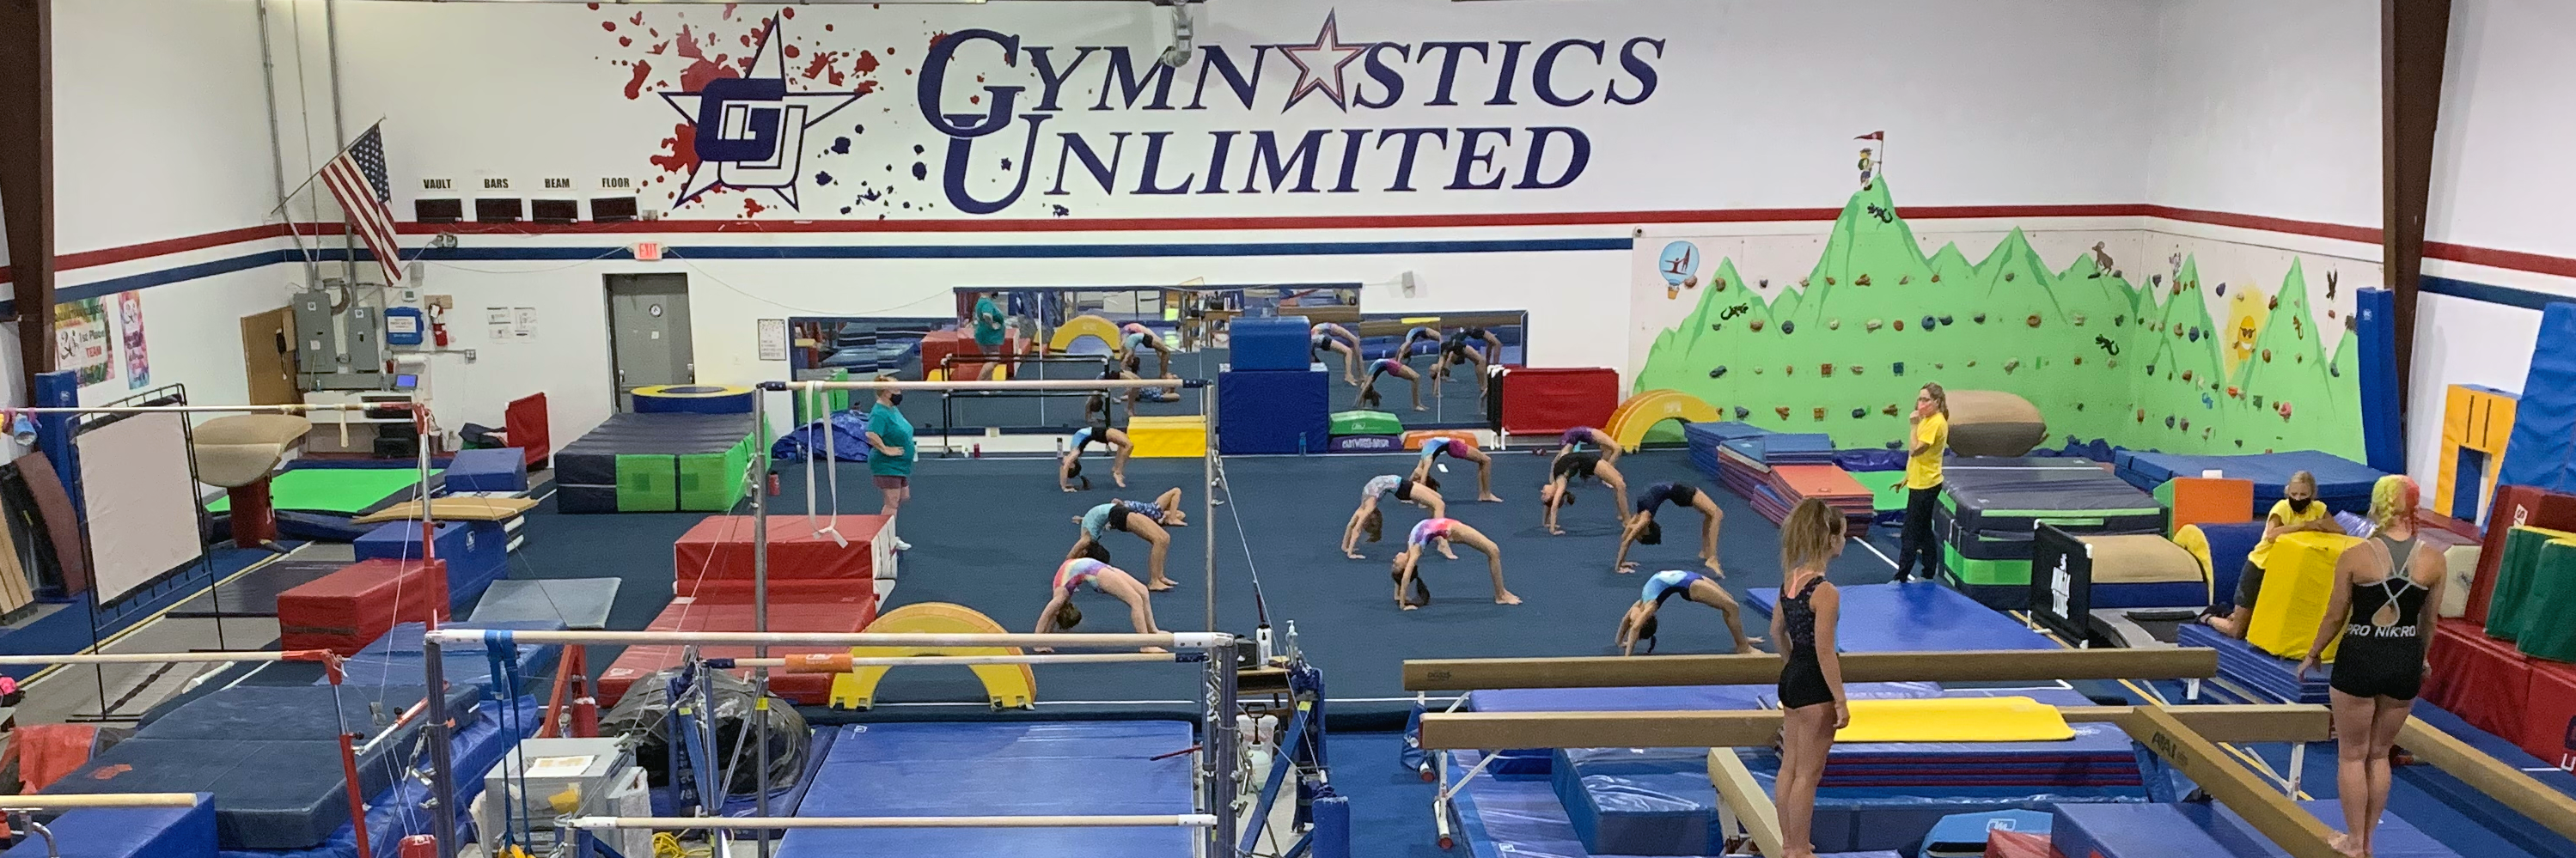 Gymnastics Unlimited Flemington NJ 3 